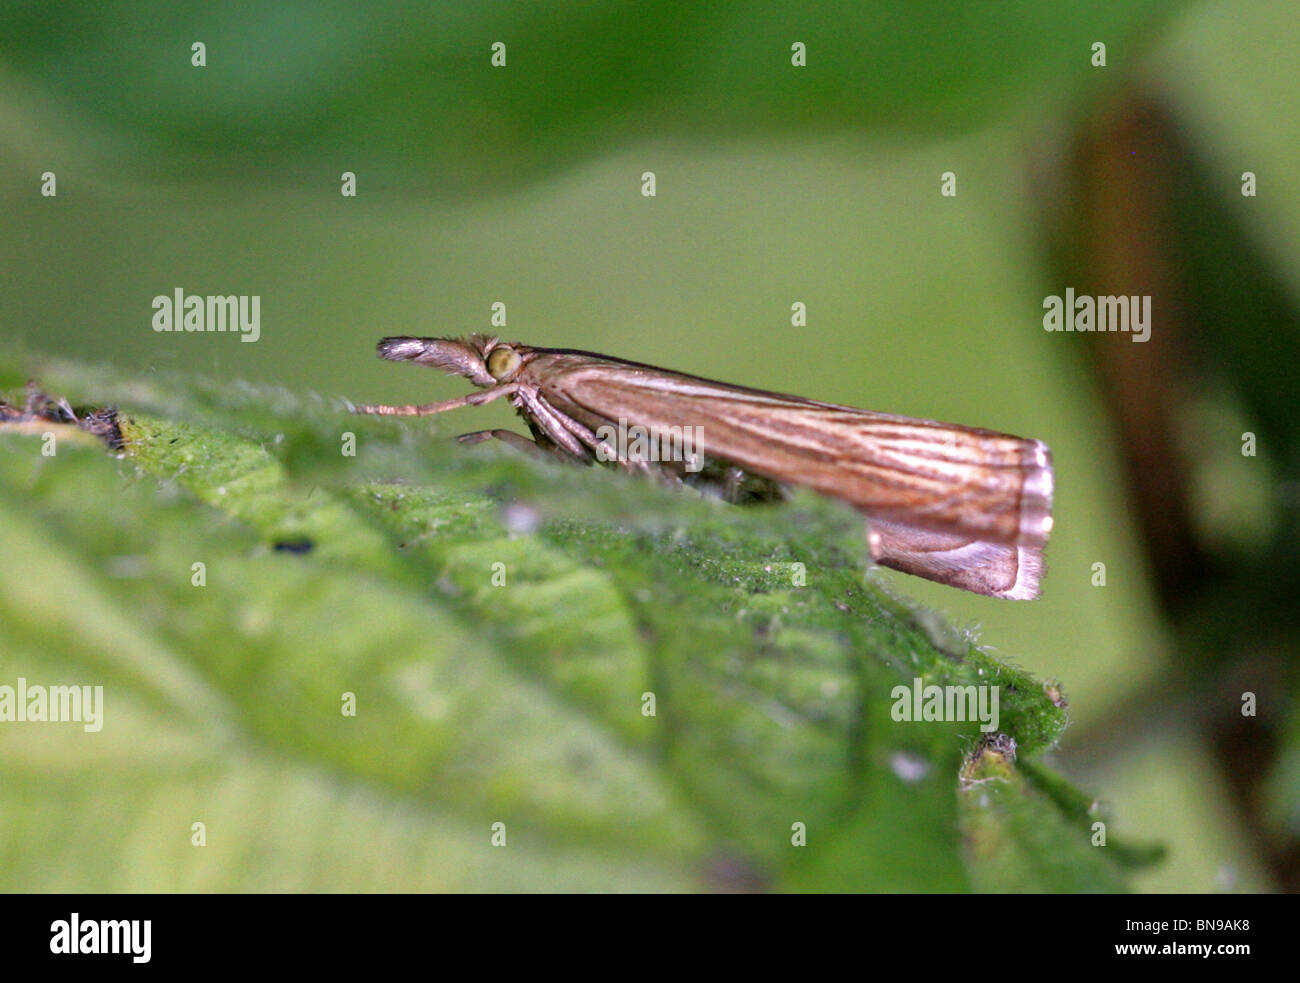 Crambid Snout Moth, Crambus sp., Crambidae, Lepidoptera. Stock Photo